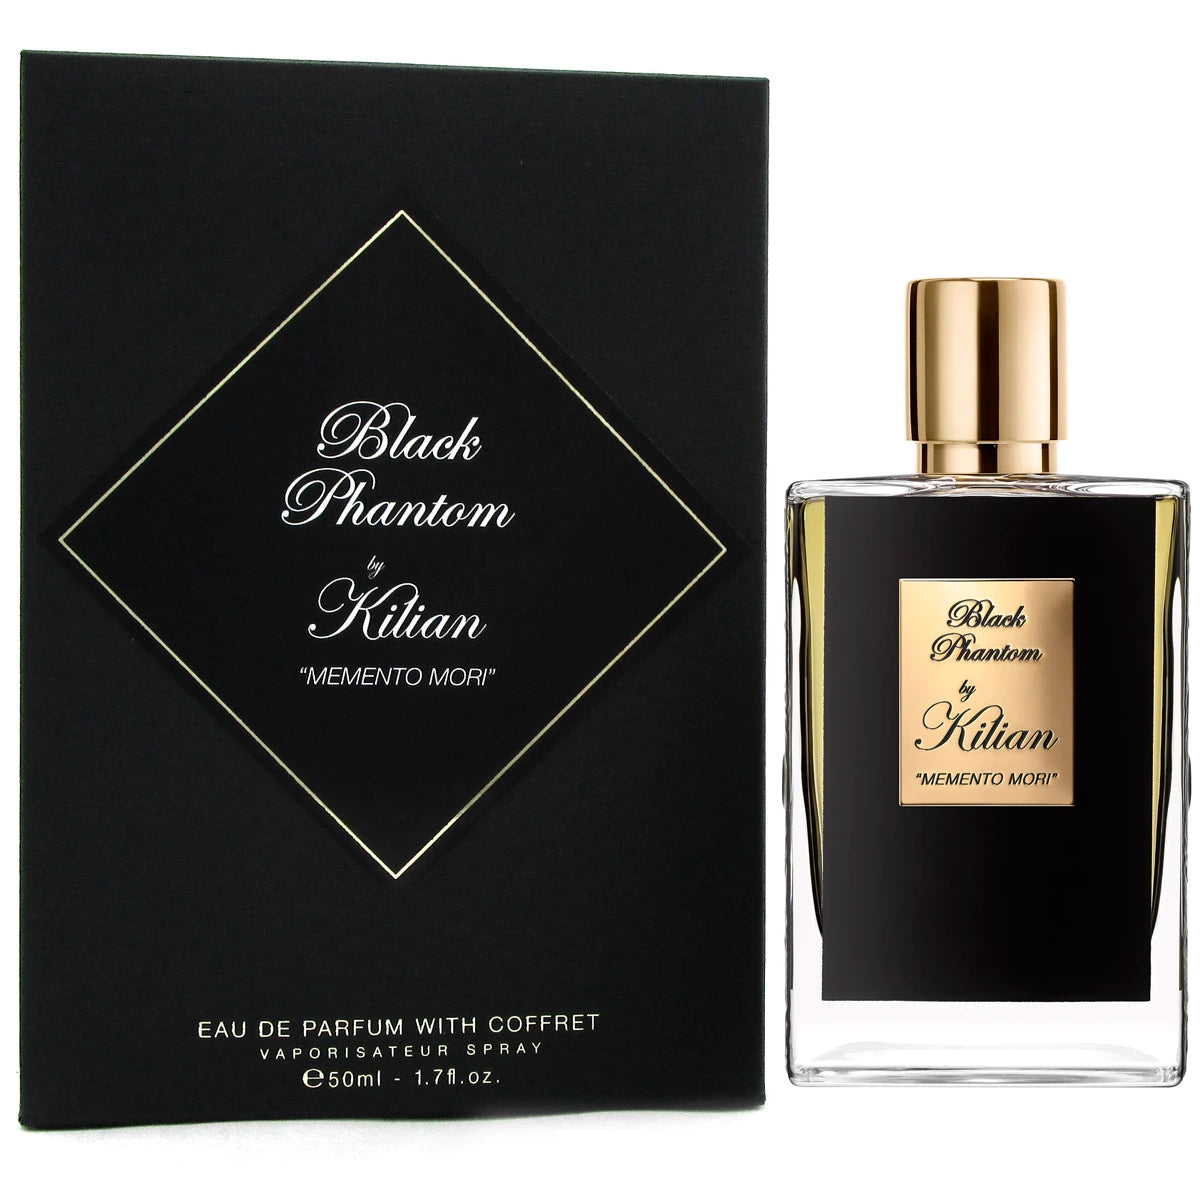 Black Phantom Memento Mori Eau de Parfum Spray by Kilian 1.7 oz